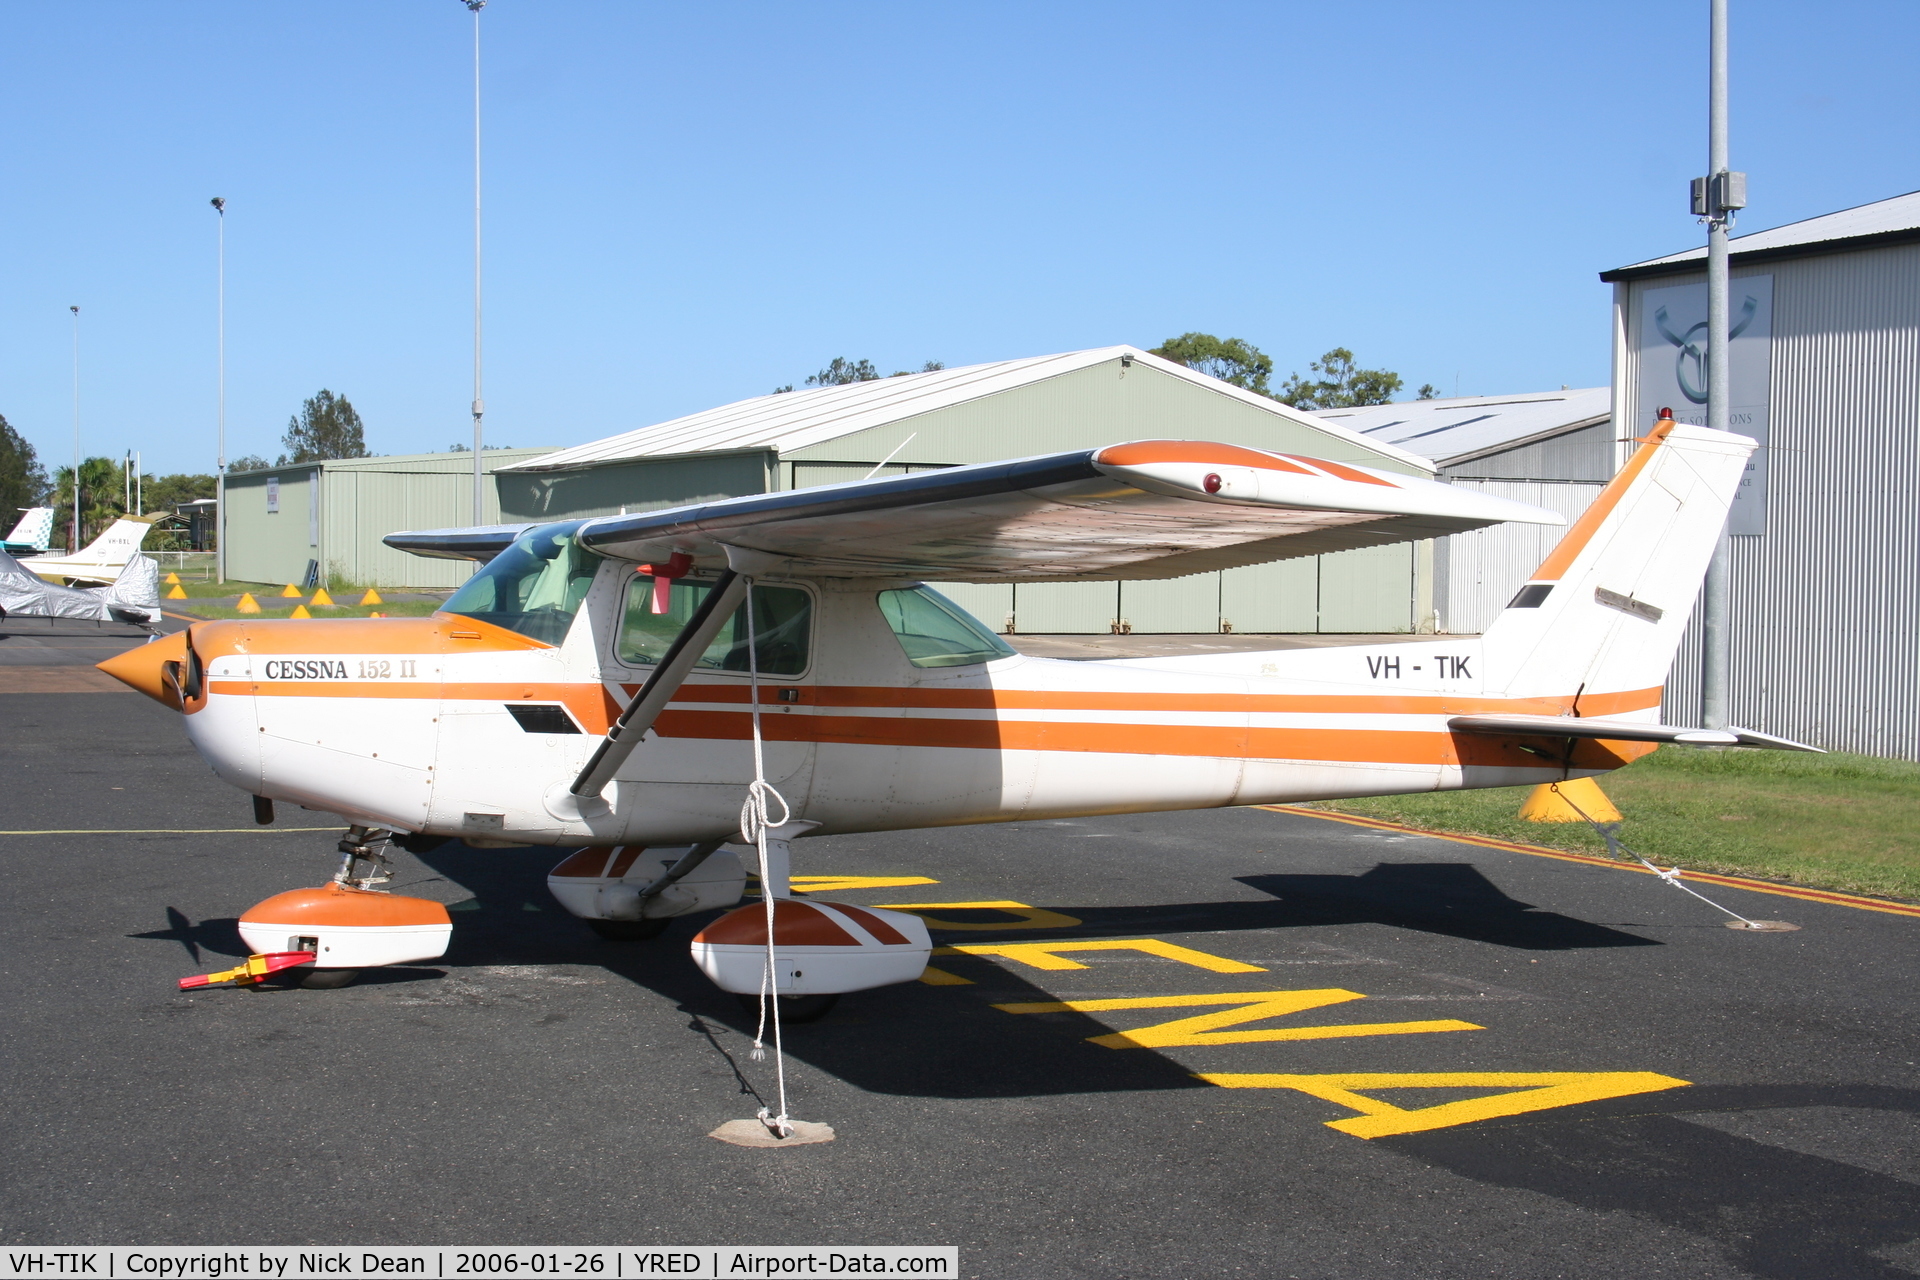 VH-TIK, 1979 Cessna 152 C/N 15283500, /